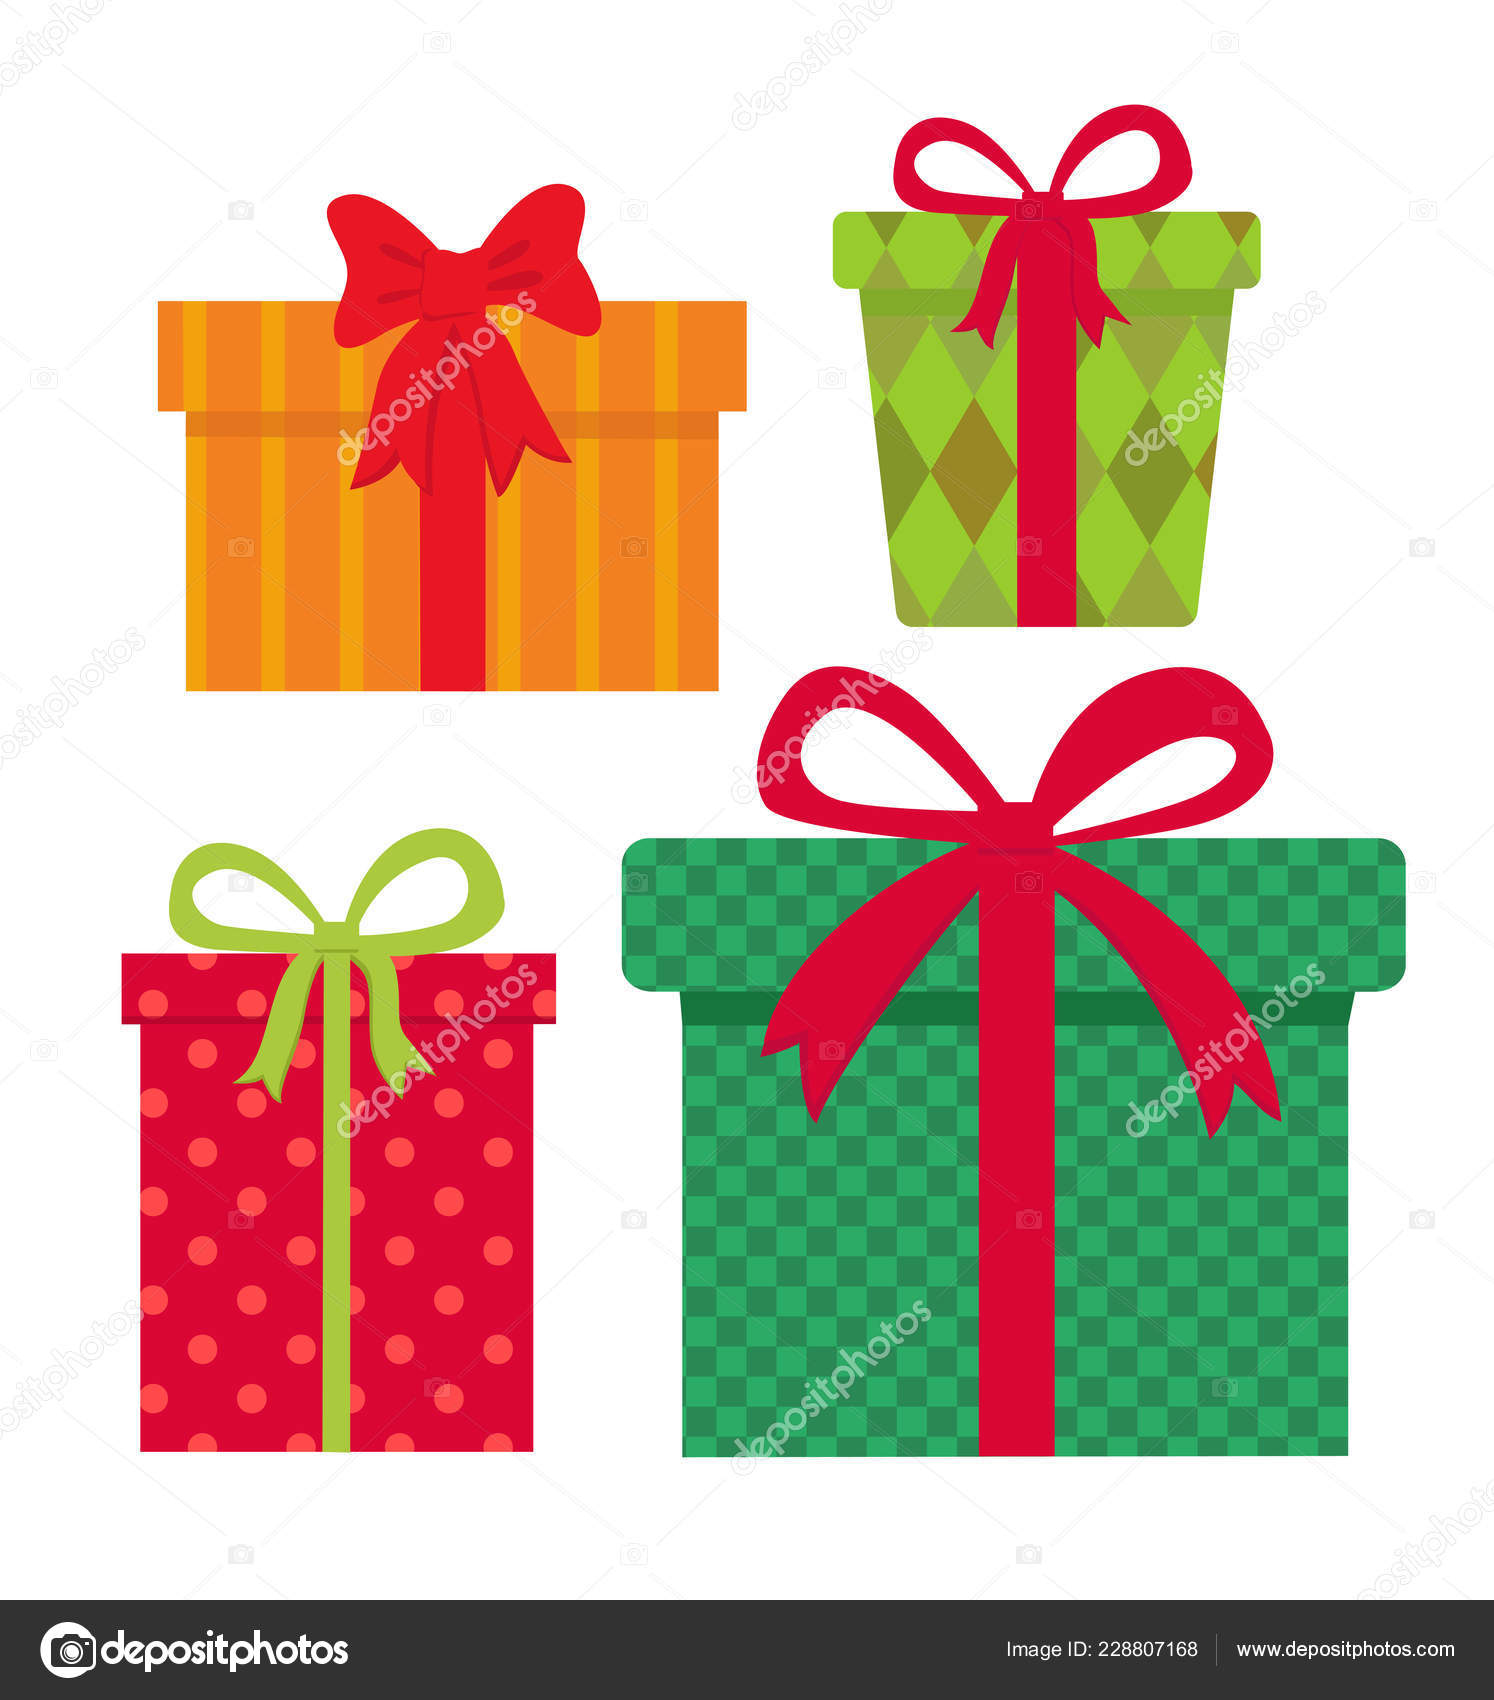 https://st4.depositphotos.com/20980838/22880/v/1600/depositphotos_228807168-stock-illustration-christmas-presents-icon-gift-boxes.jpg